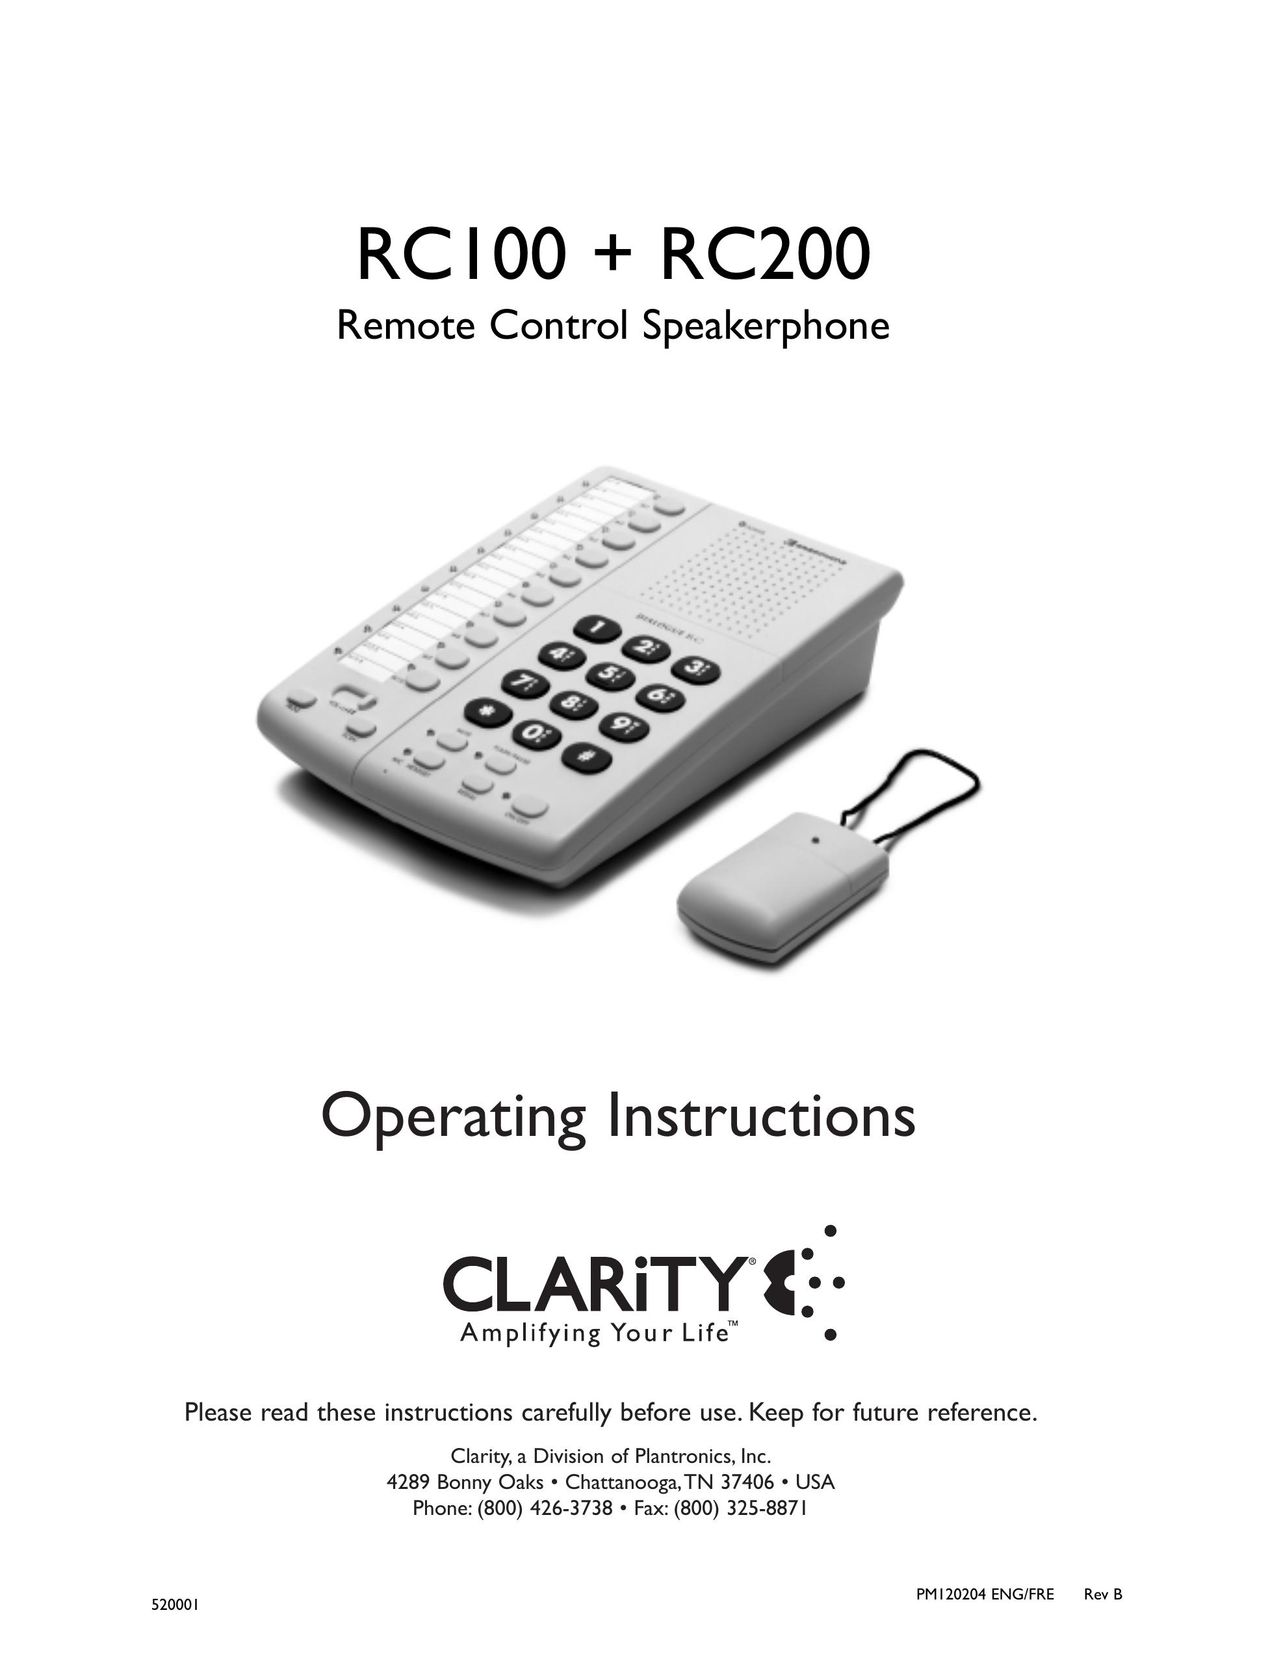 Clarity RC200 Telephone User Manual